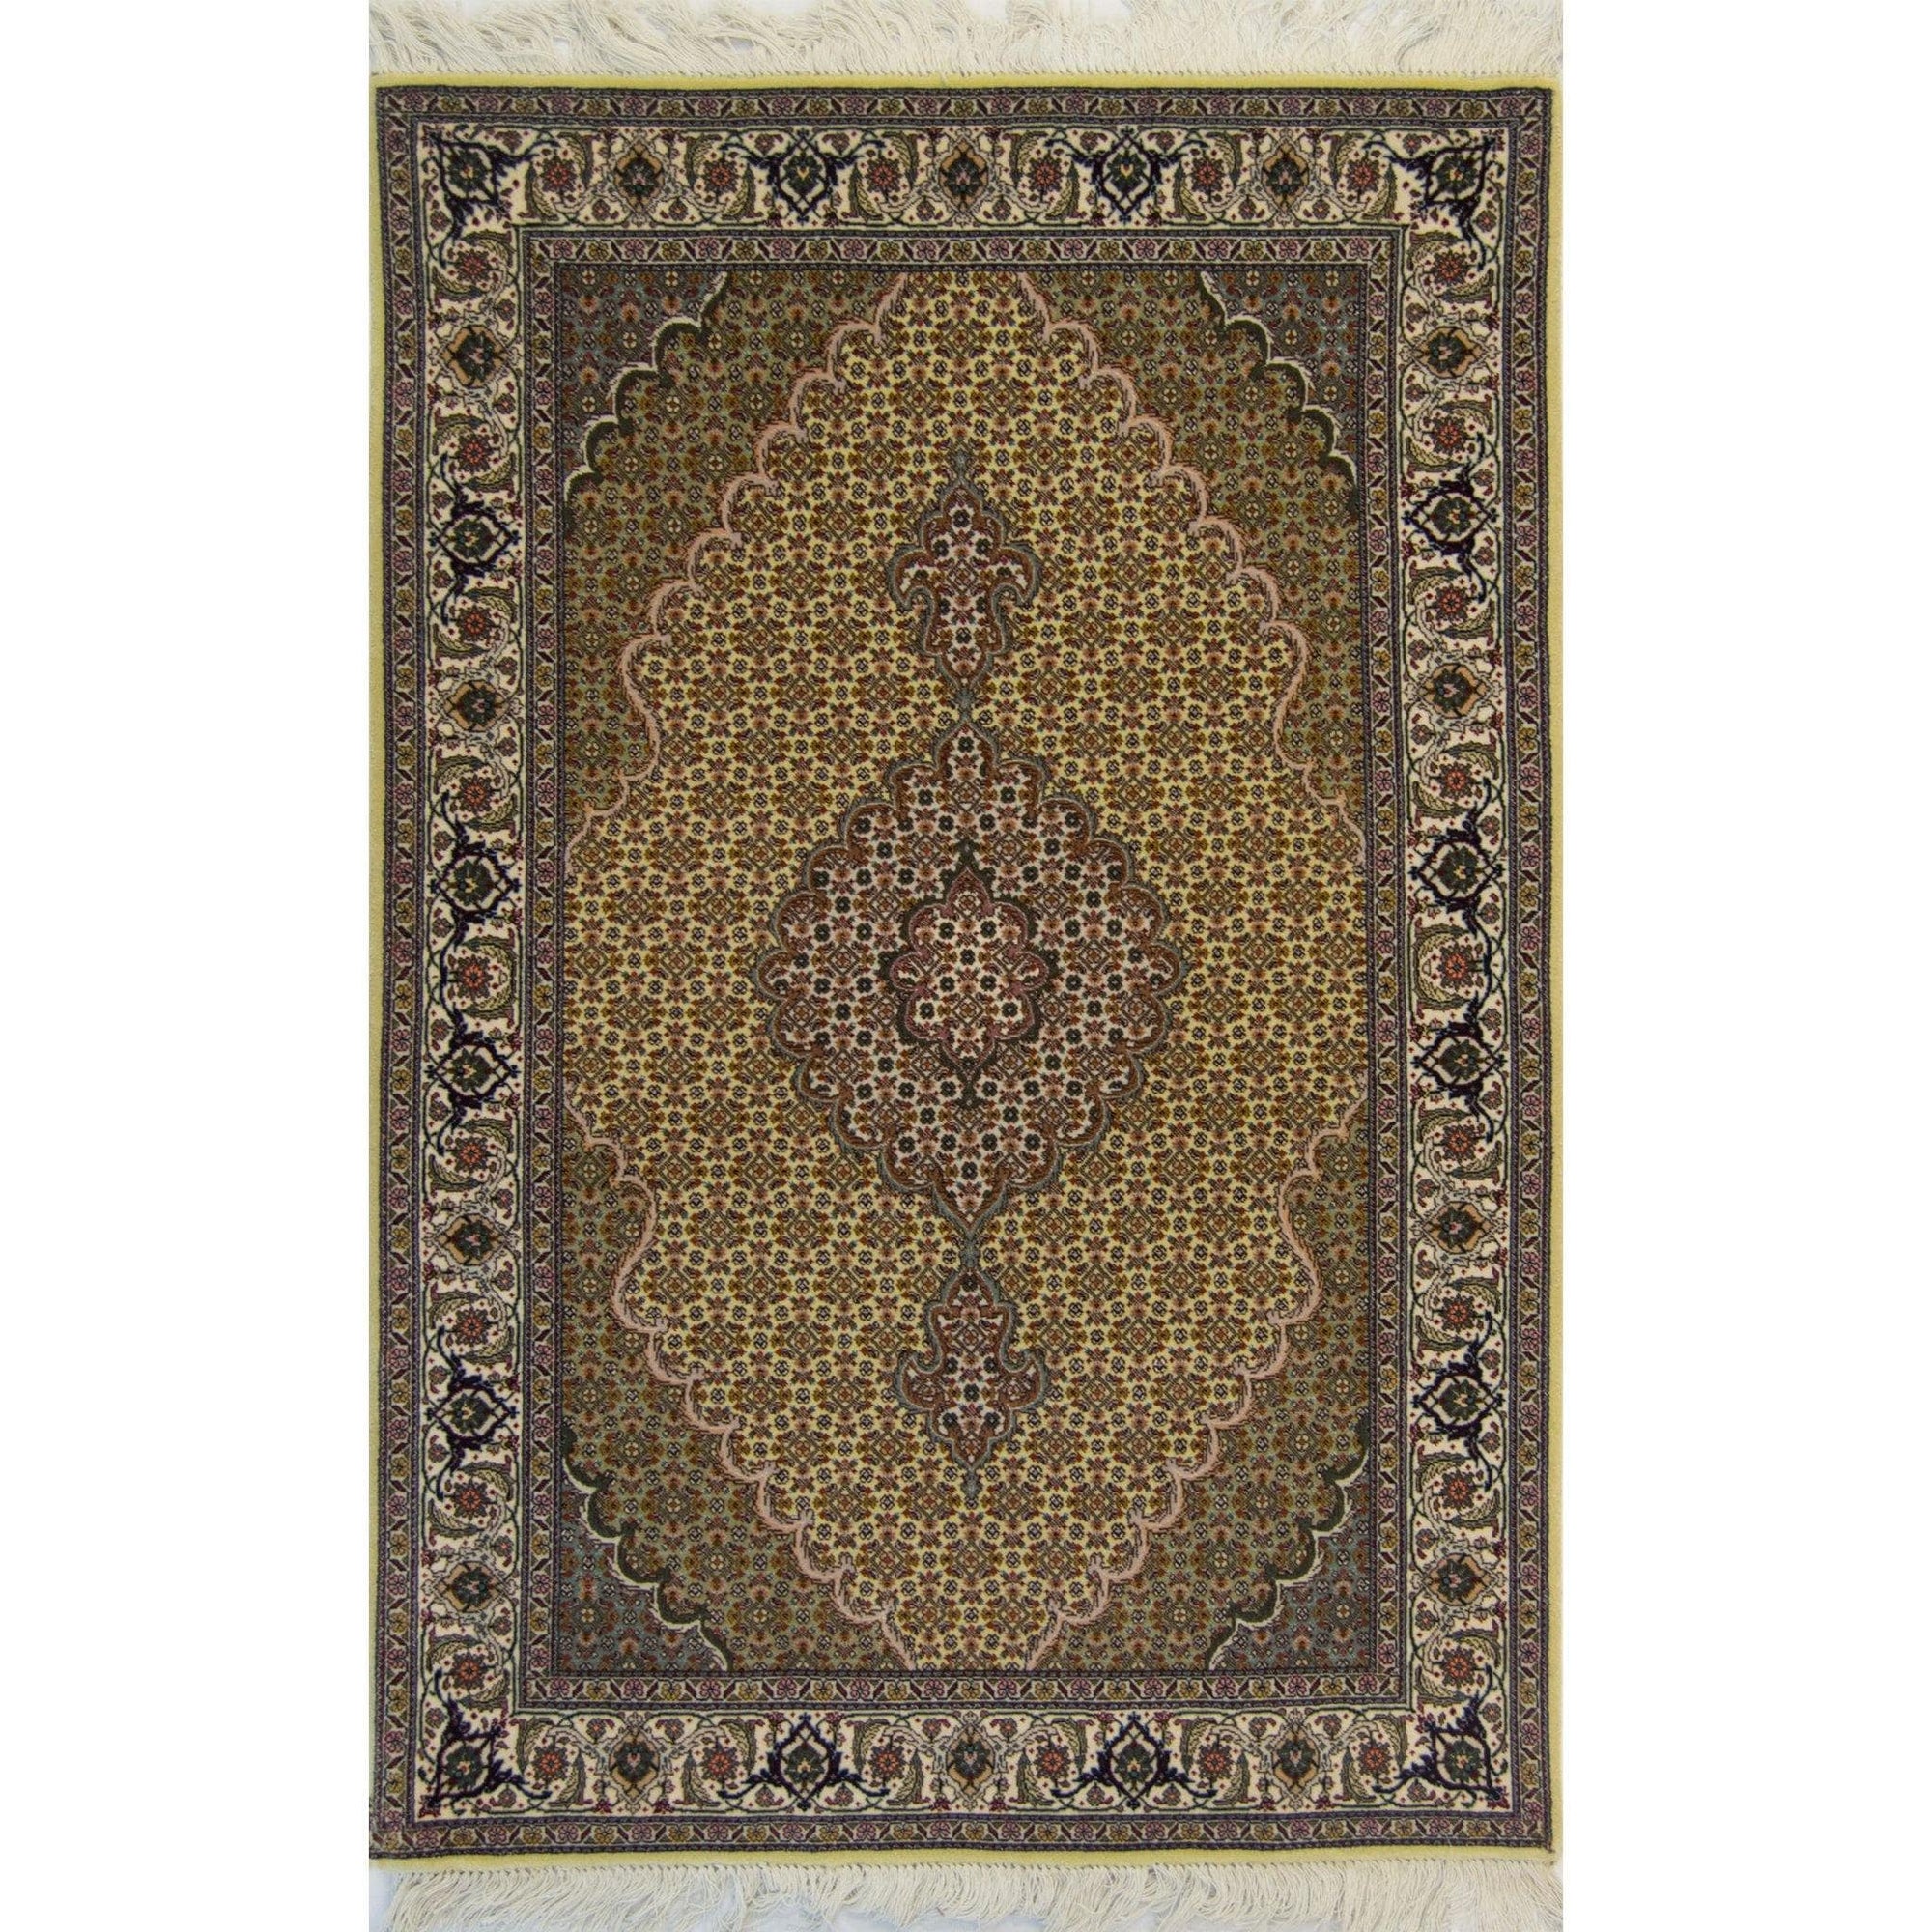 Fine Hand-knotted Persian Wool and Silk Tabriz - Mahi Rug 101cm x 155cm